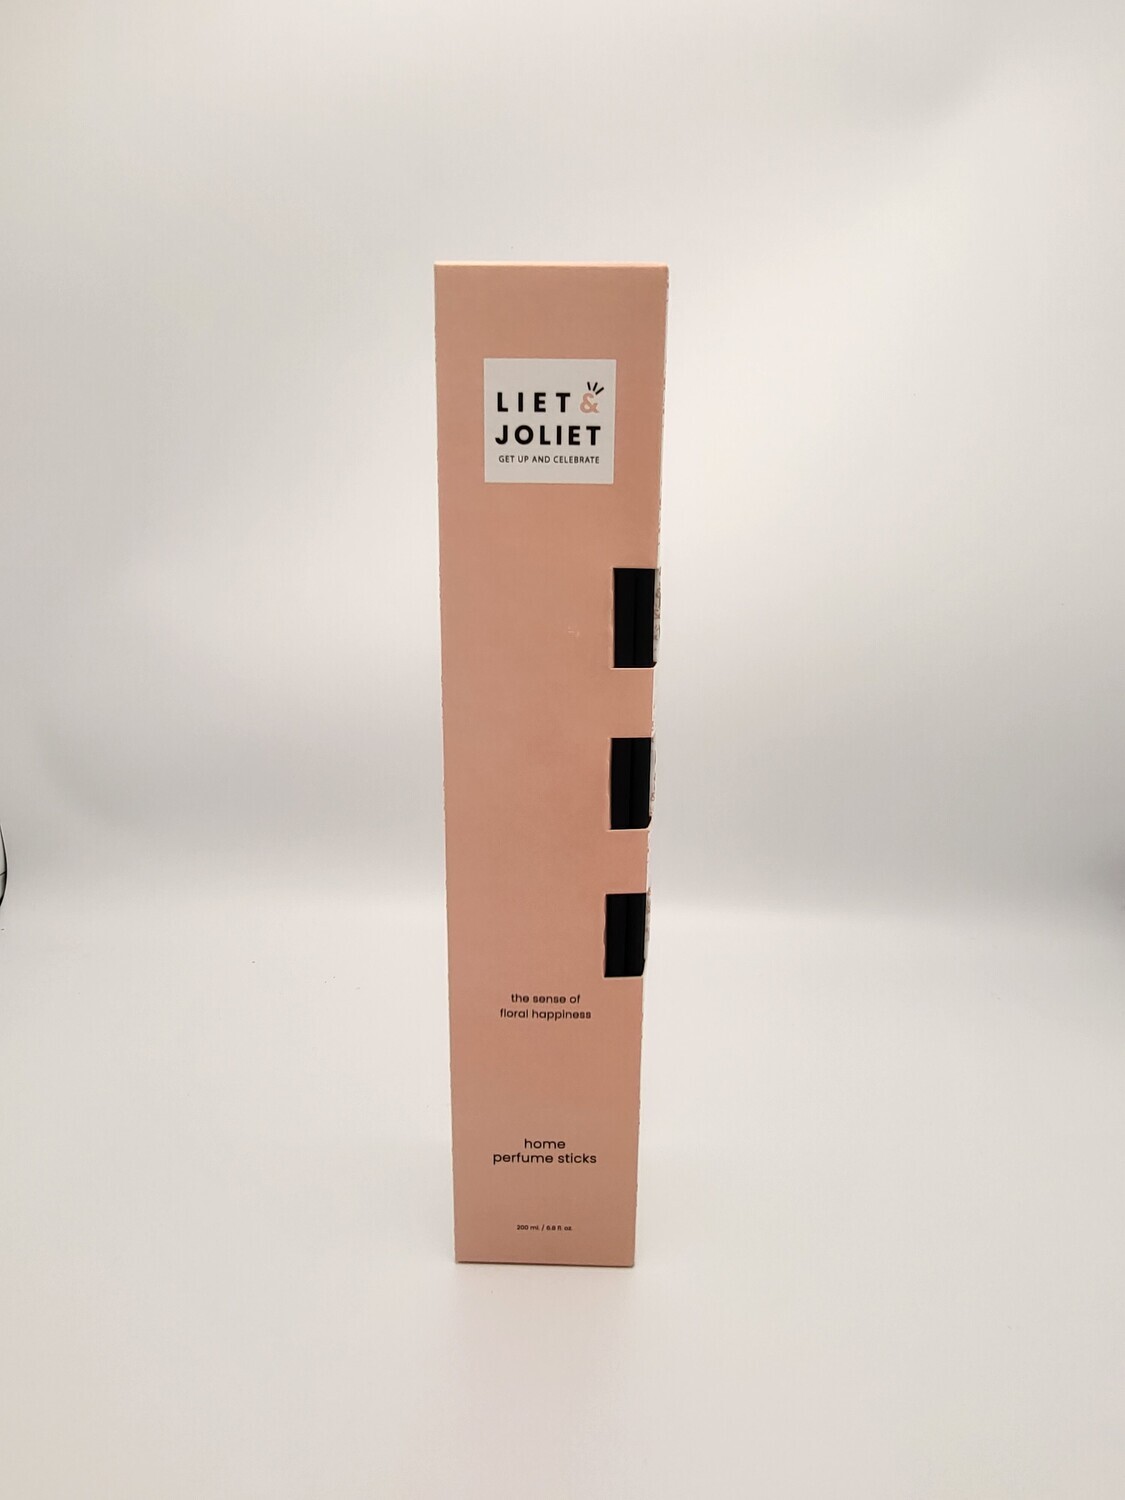 Liet & Joliet home perfume sticks